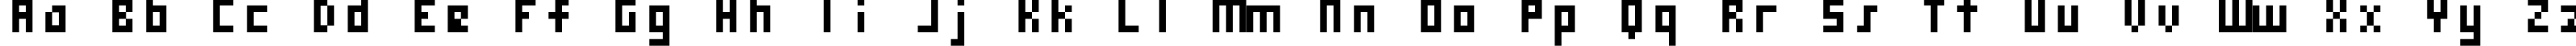 Пример написания английского алфавита шрифтом monooge 05_55